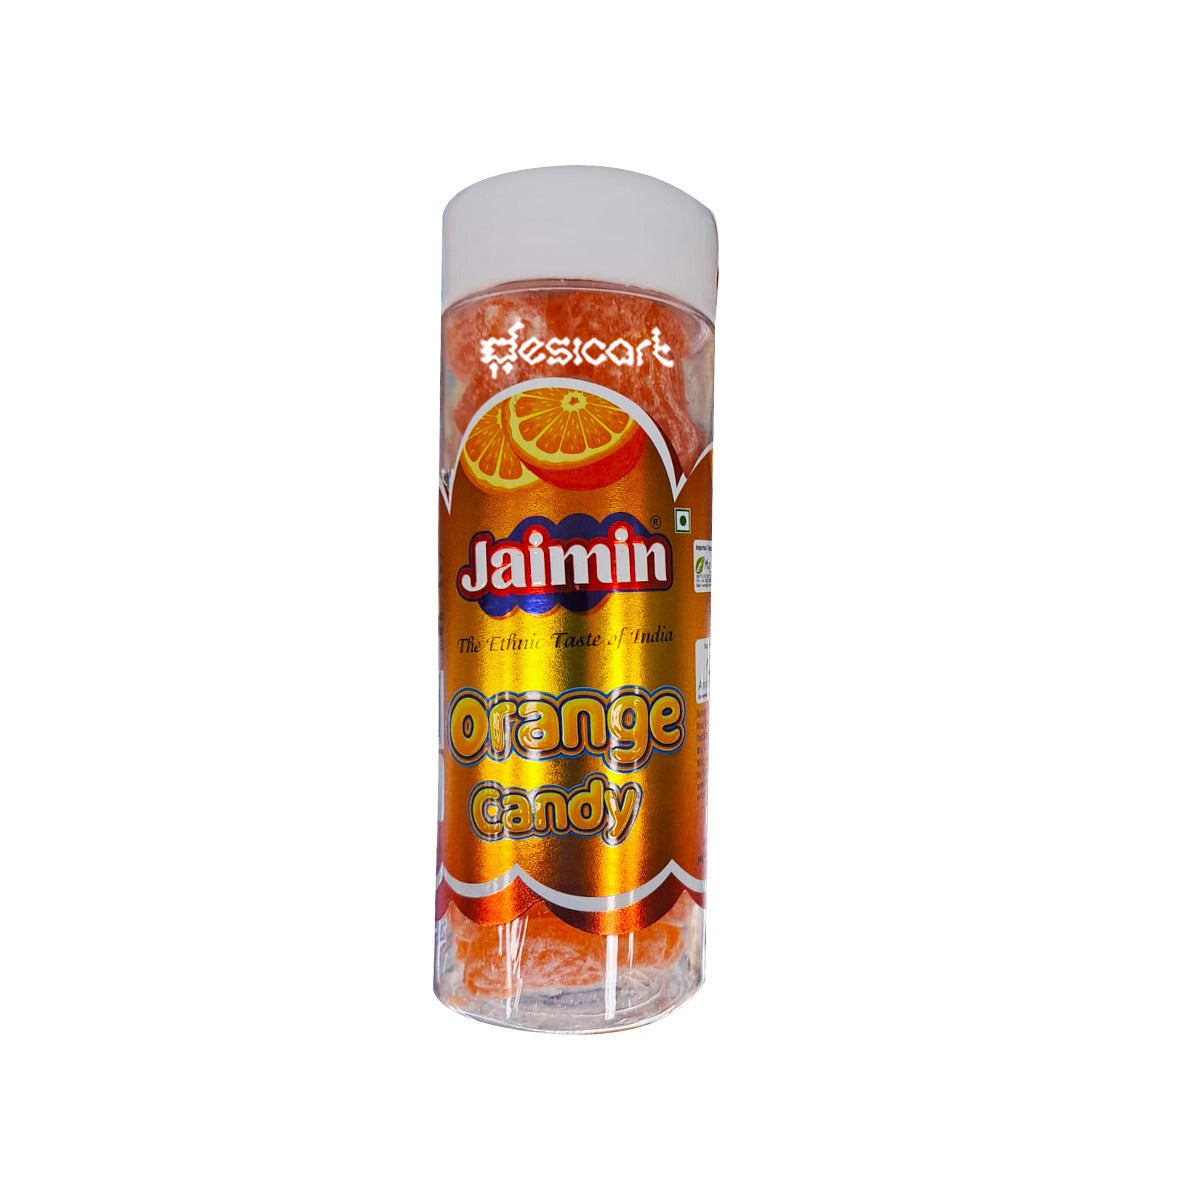 Jaimin Orange Candy 150g